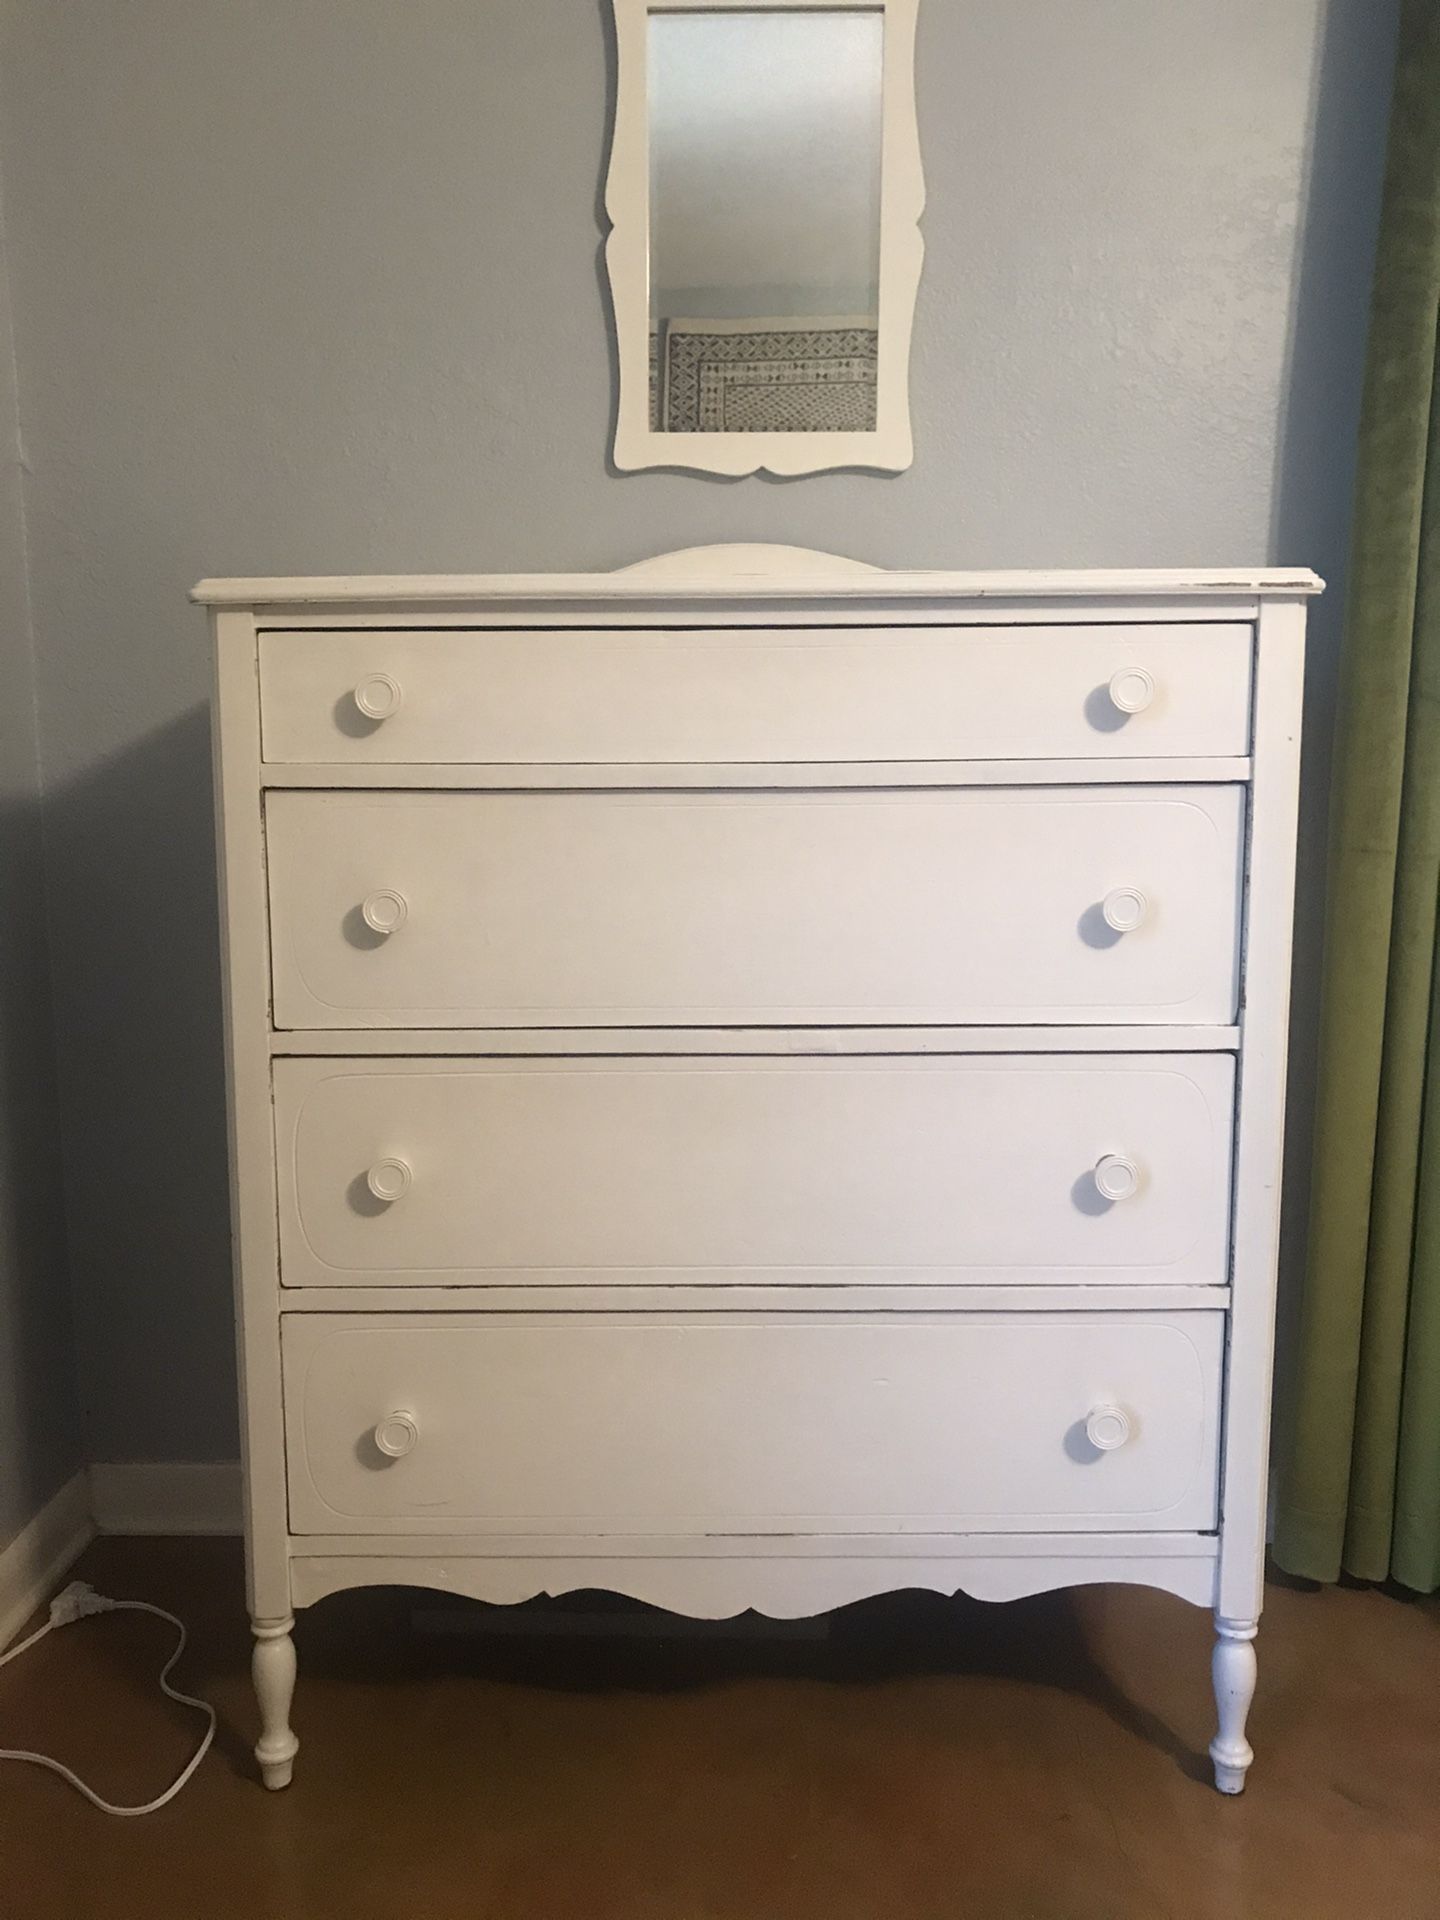 Antique 4 drawer dresser